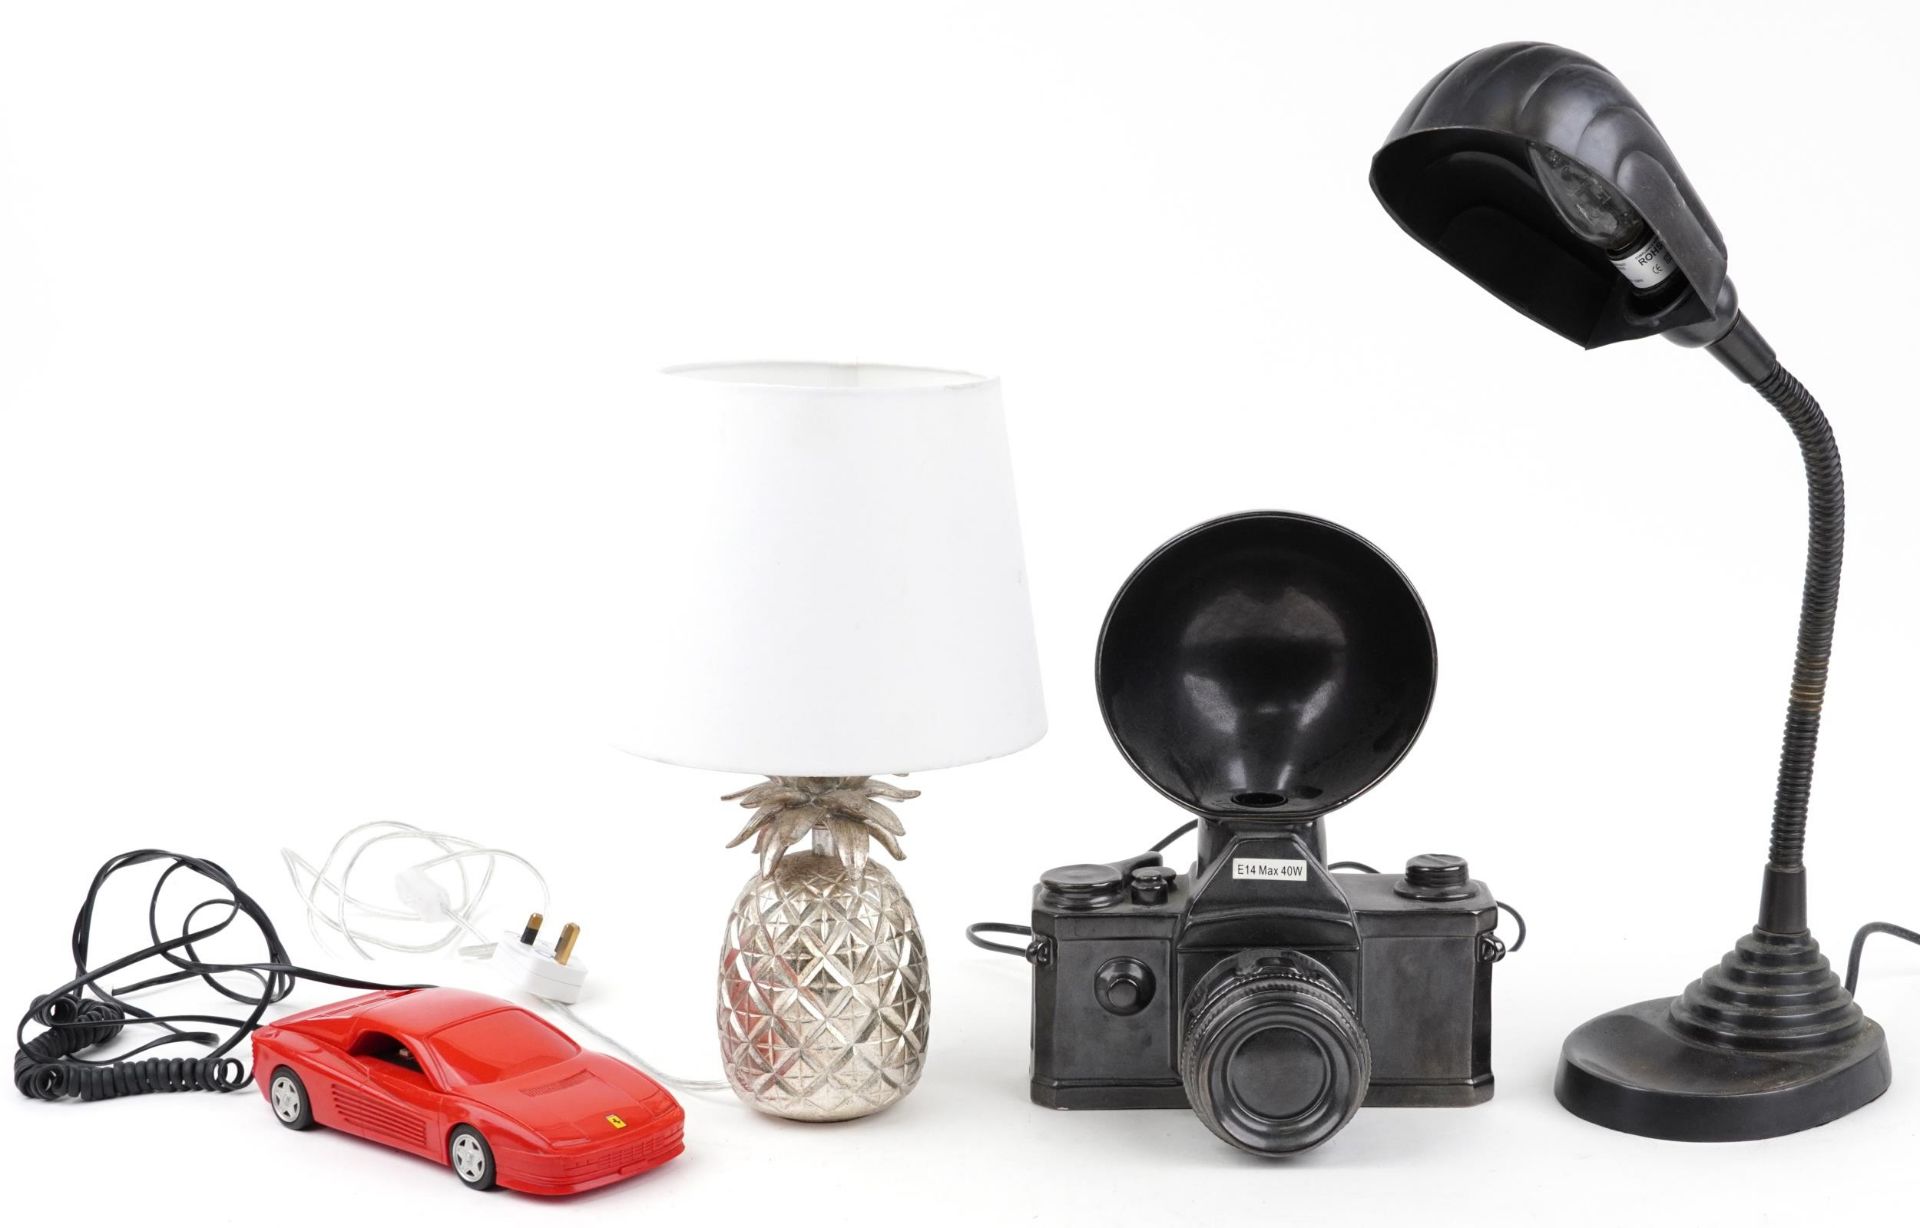 Three retro table lamps and a Betacom Ferrari Testarossa telephone, the lamps comprising a Laura